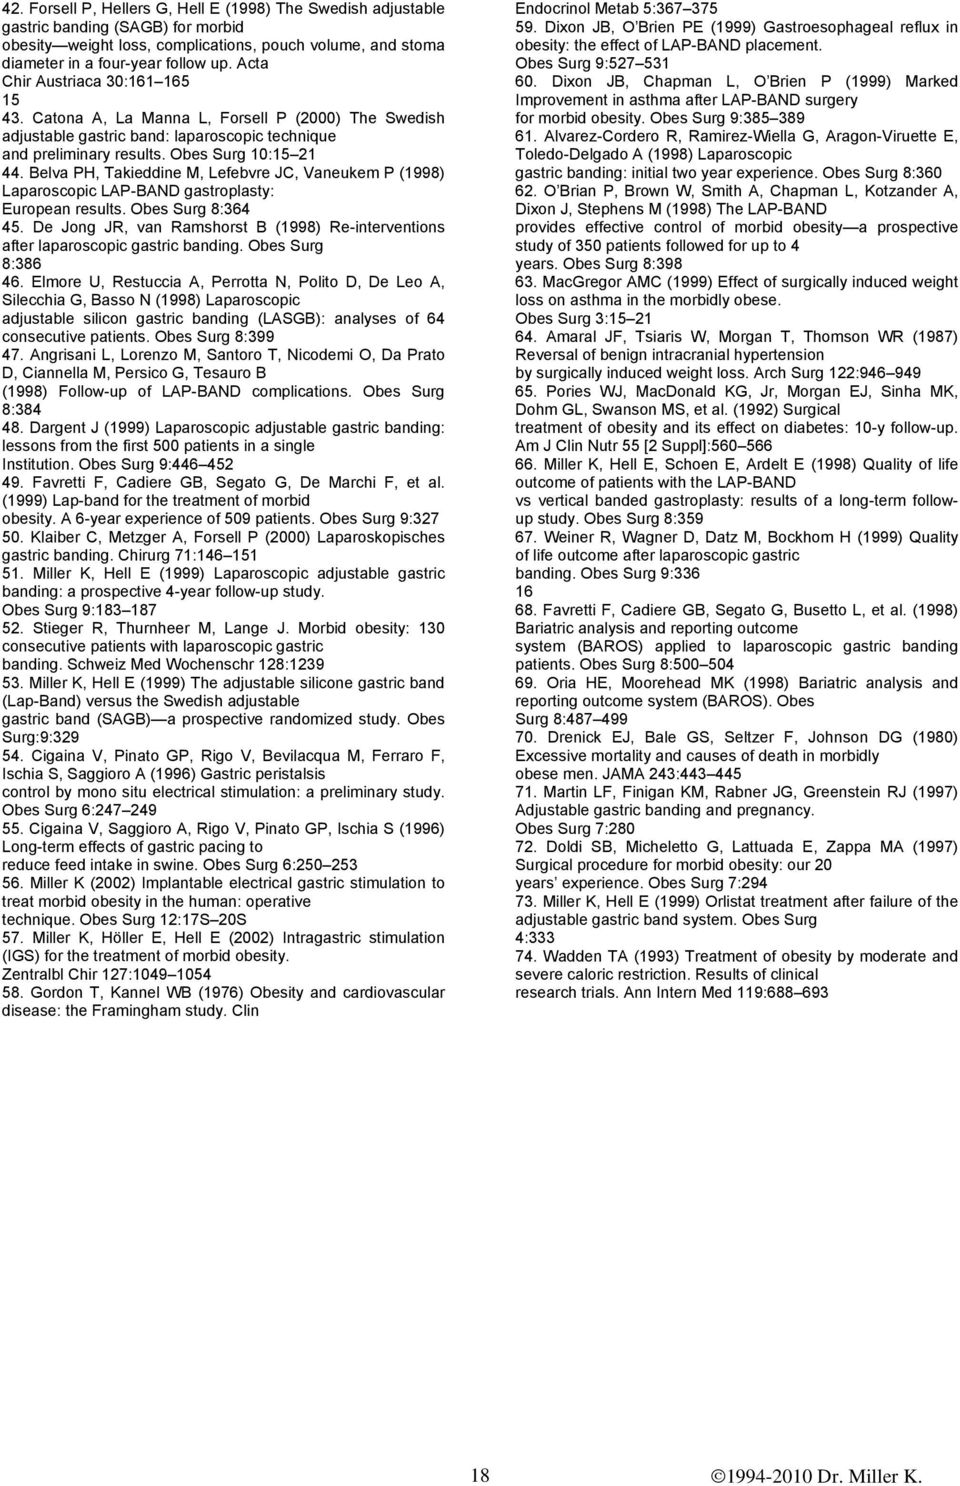 Belva PH, Takieddine M, Lefebvre JC, Vaneukem P (1998) Laparoscopic LAP-BAND gastroplasty: European results. Obes Surg 8:364 45.